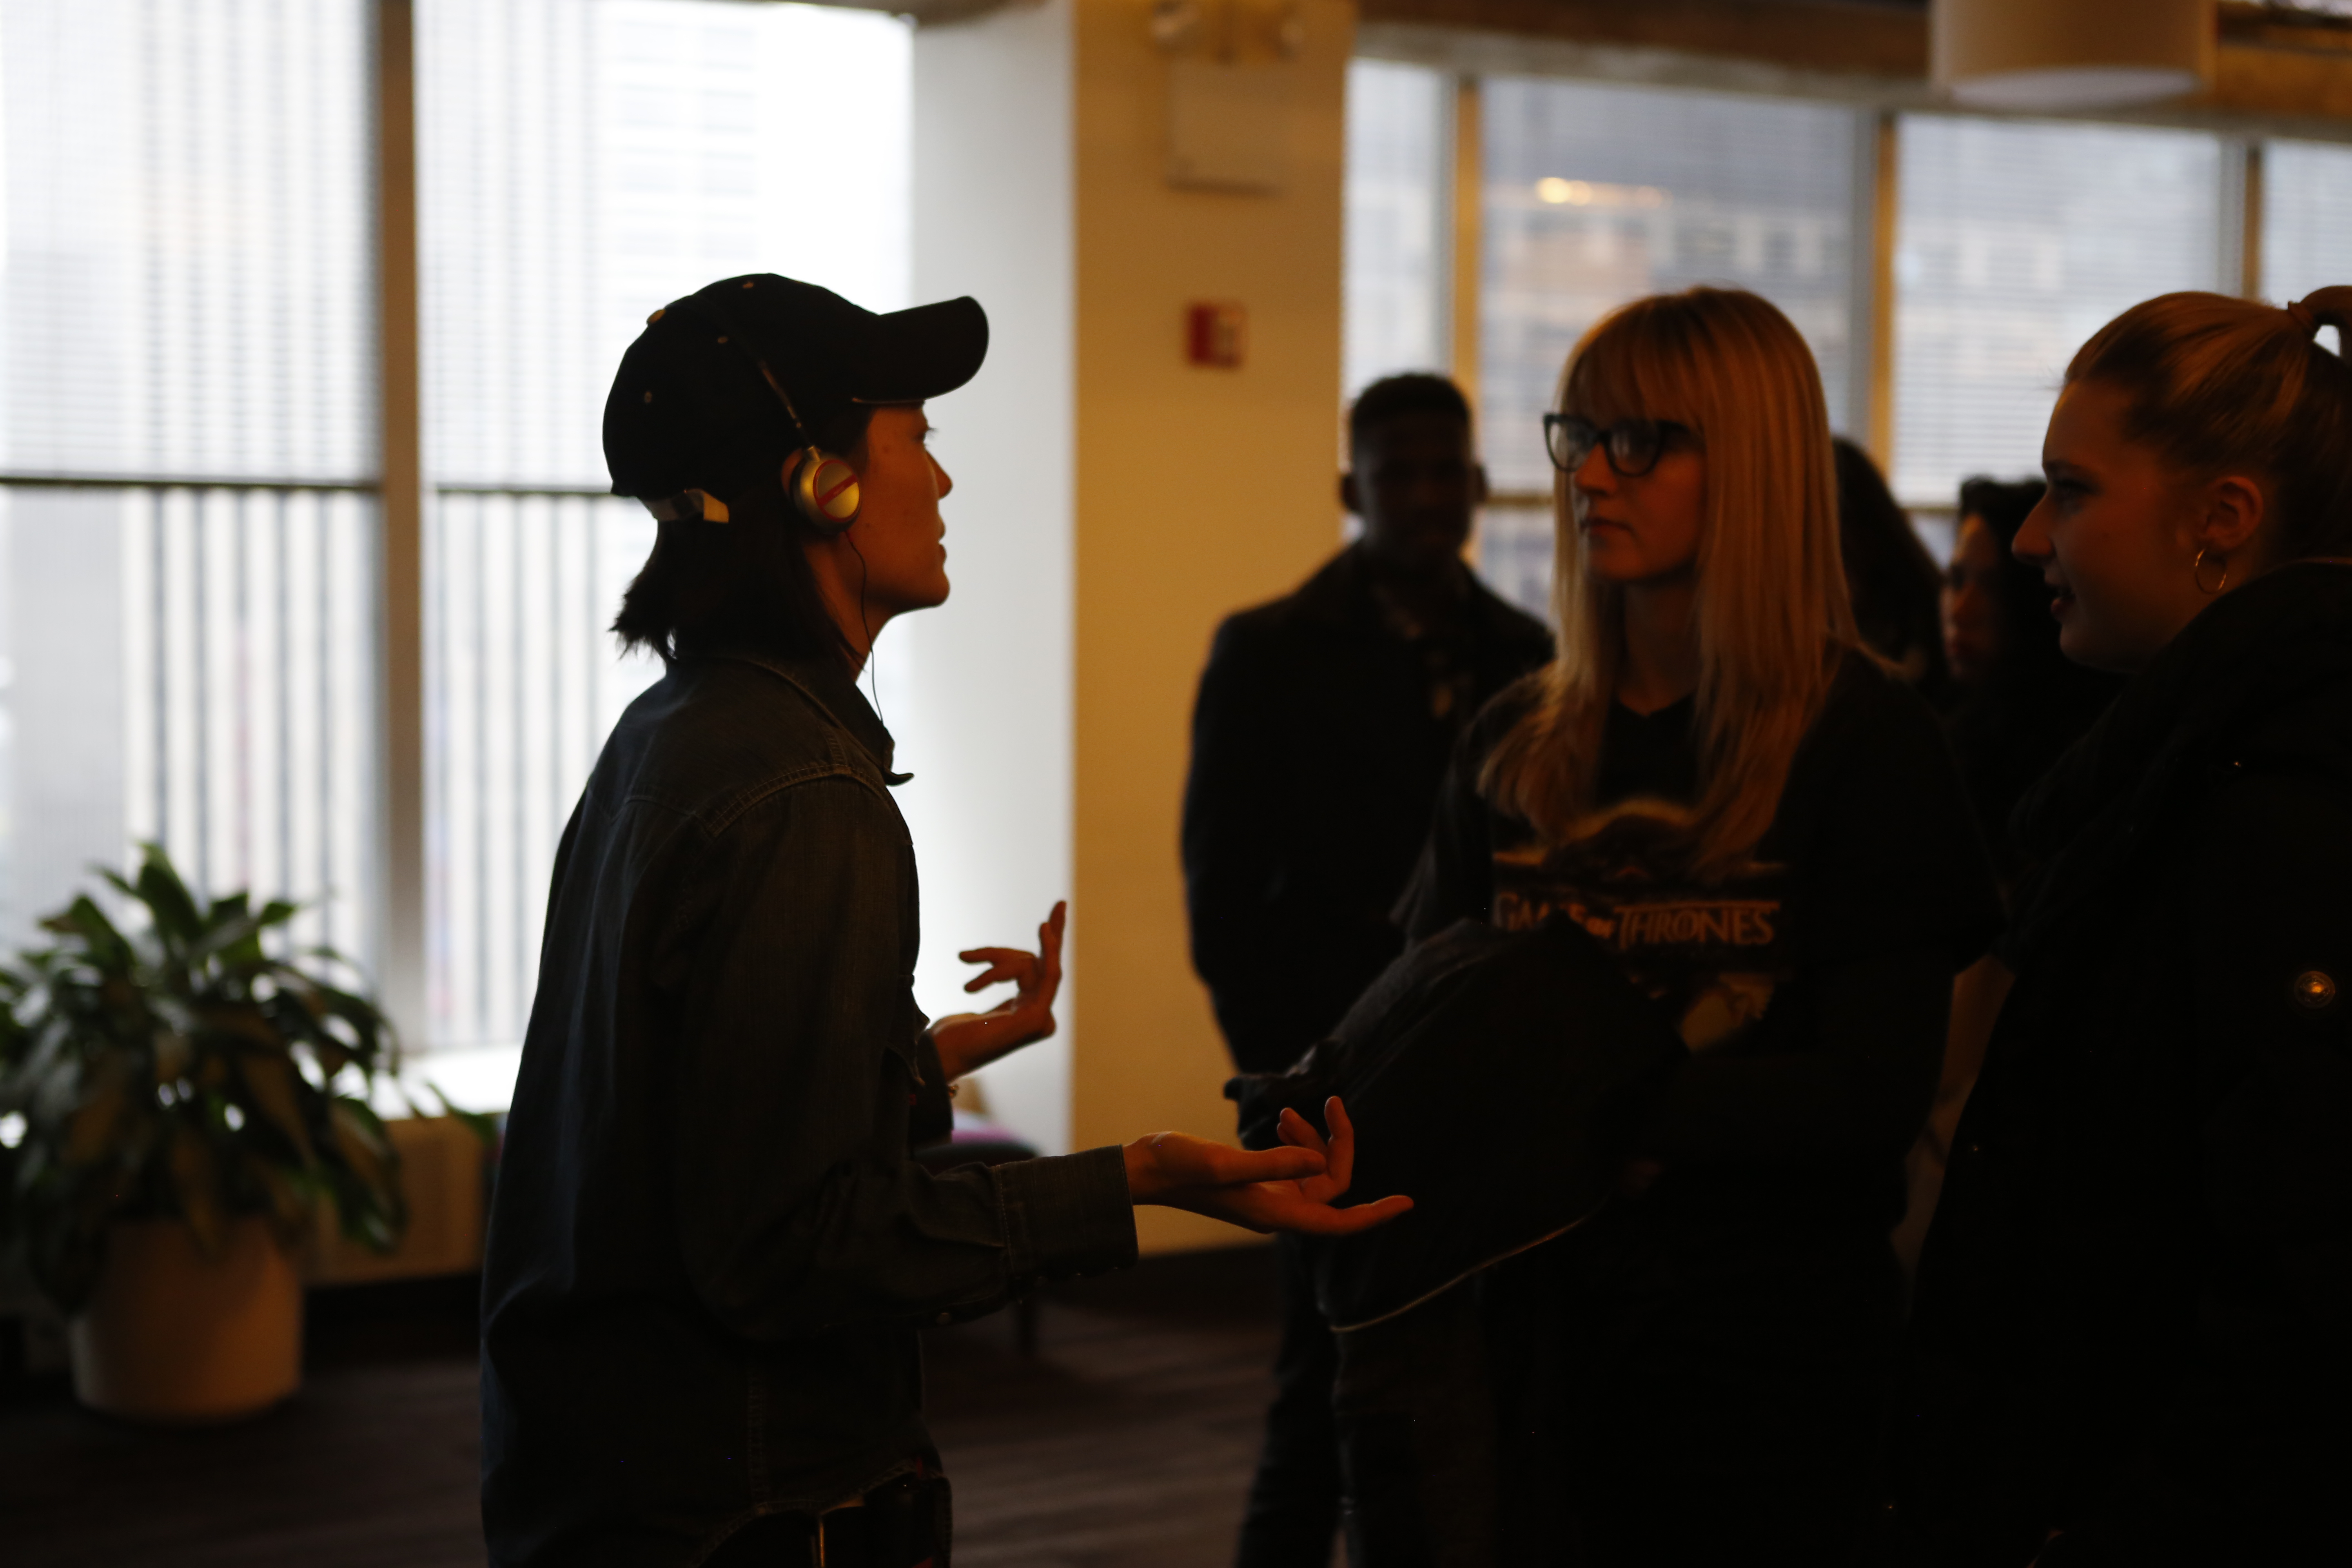 Caroline Mariko Stucky - Director of Photography, talking to actresses Julia Green & Shelby Finnie.